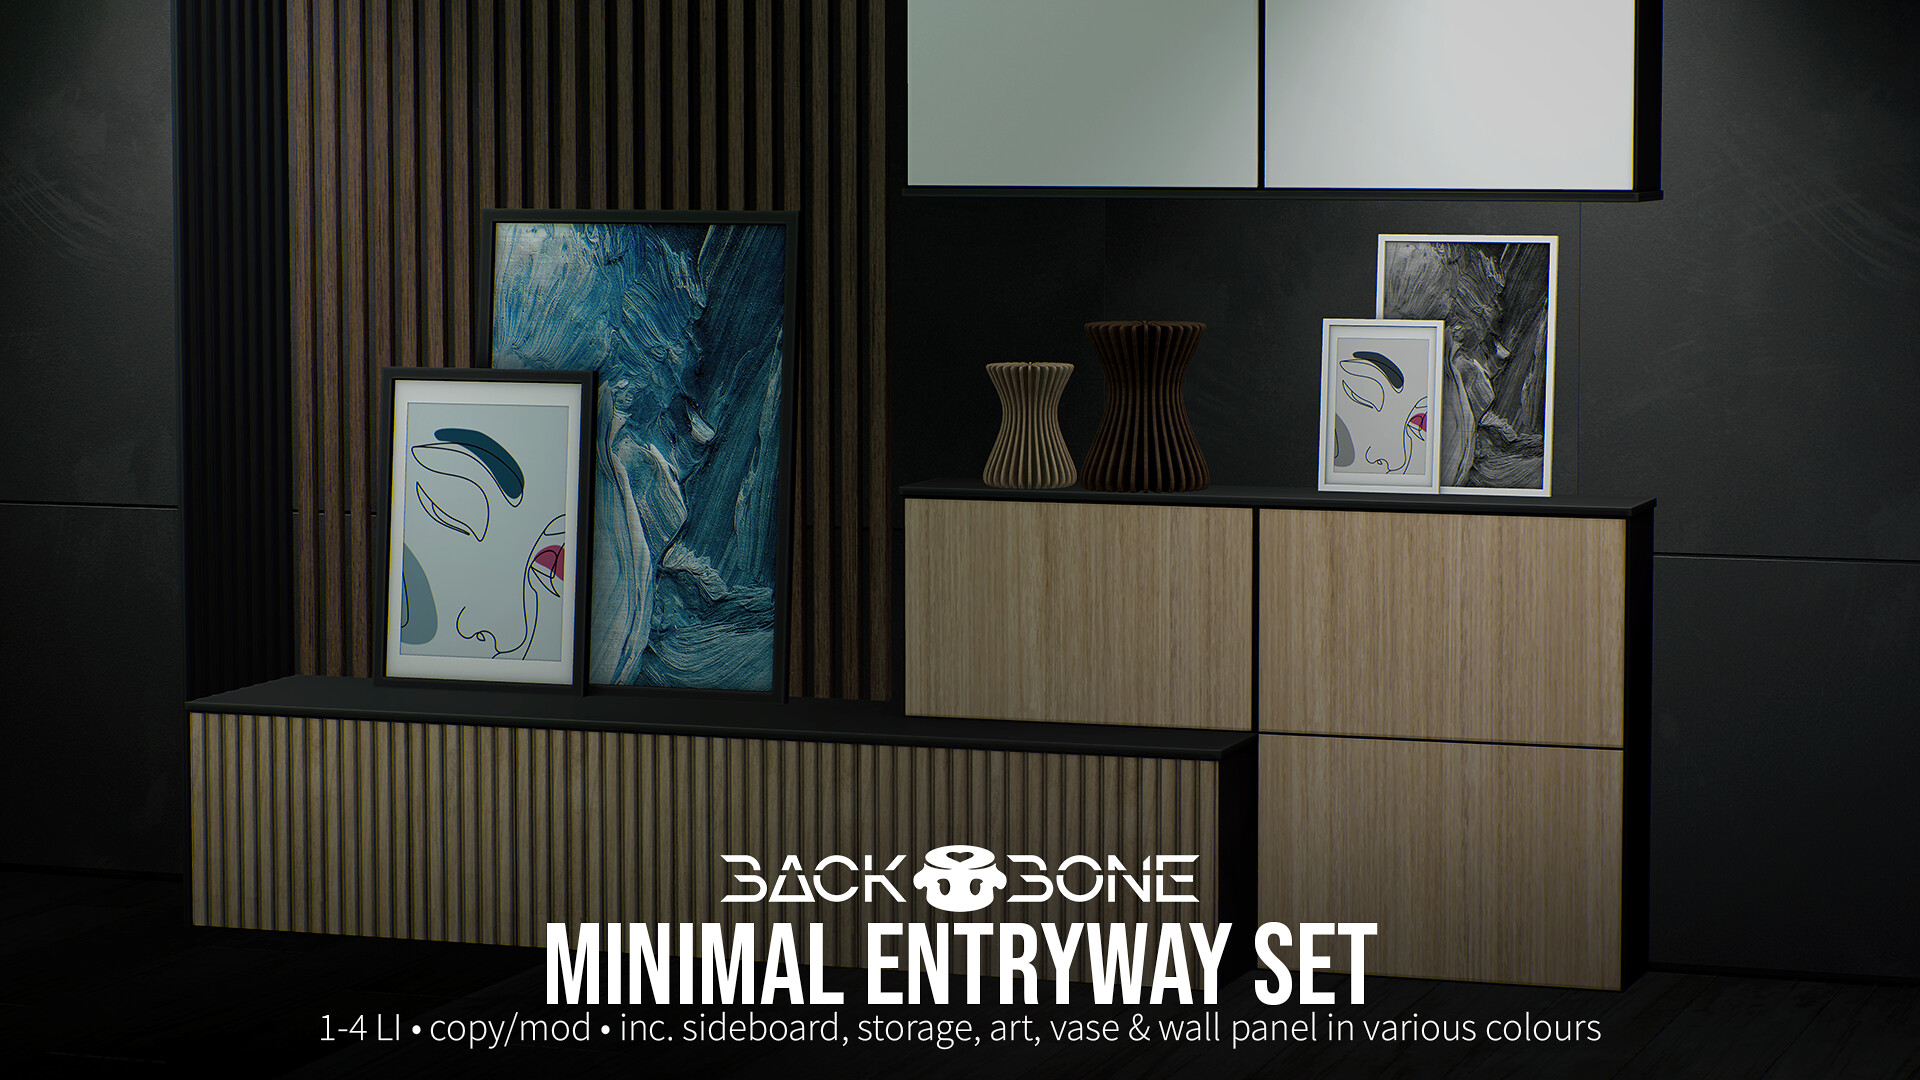 BackBone – Minimal Entryway Set